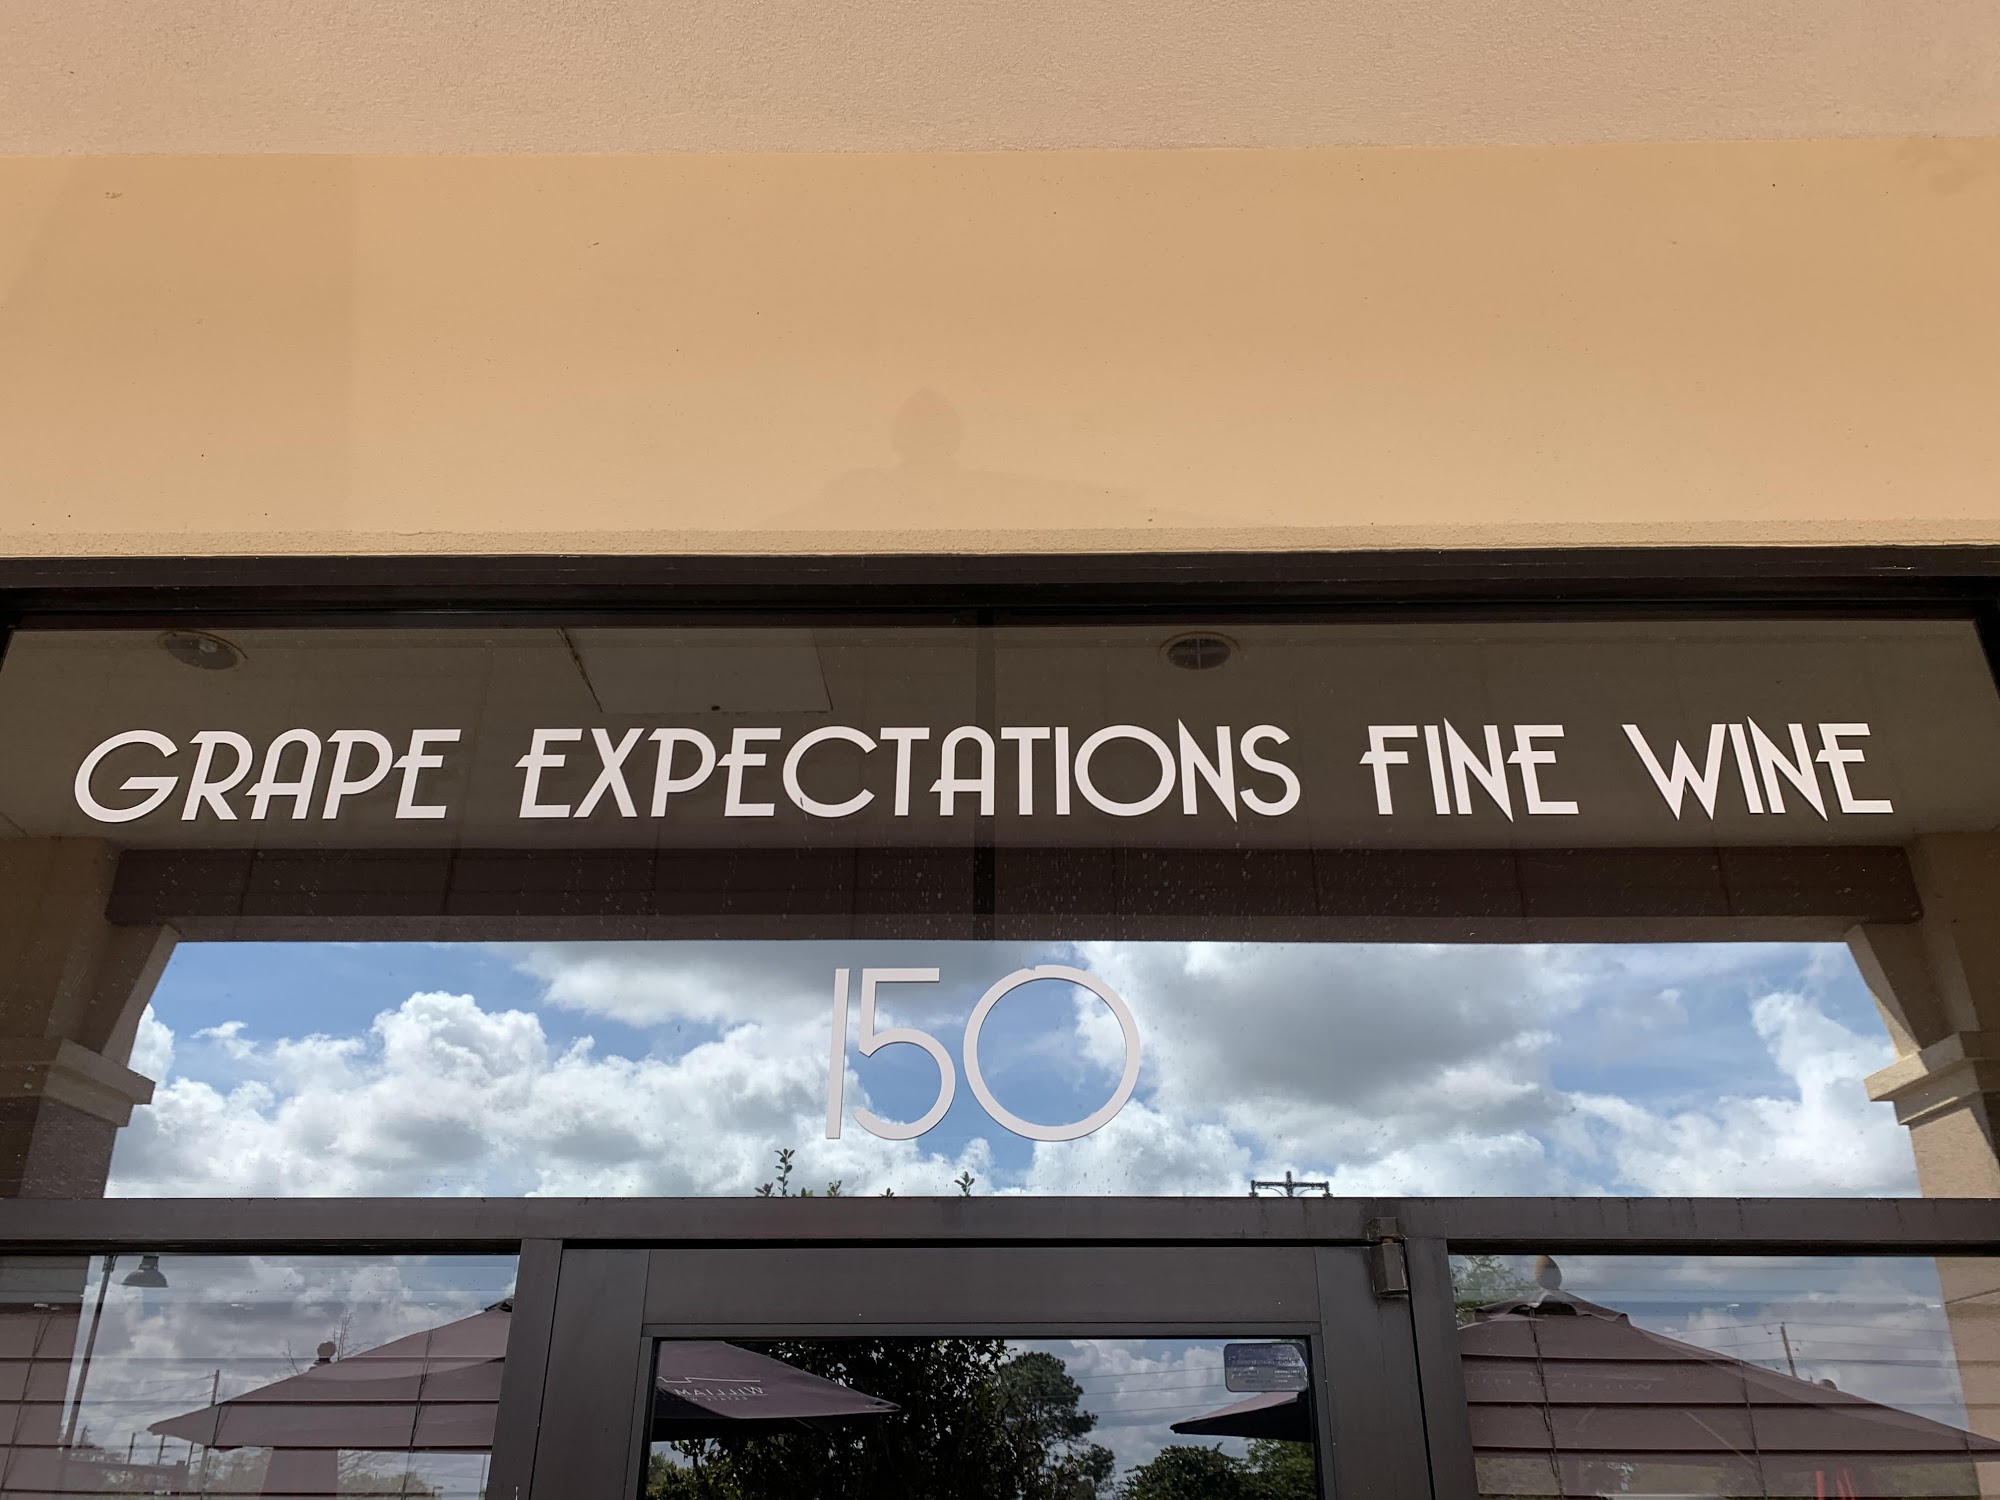 Grape Expectations